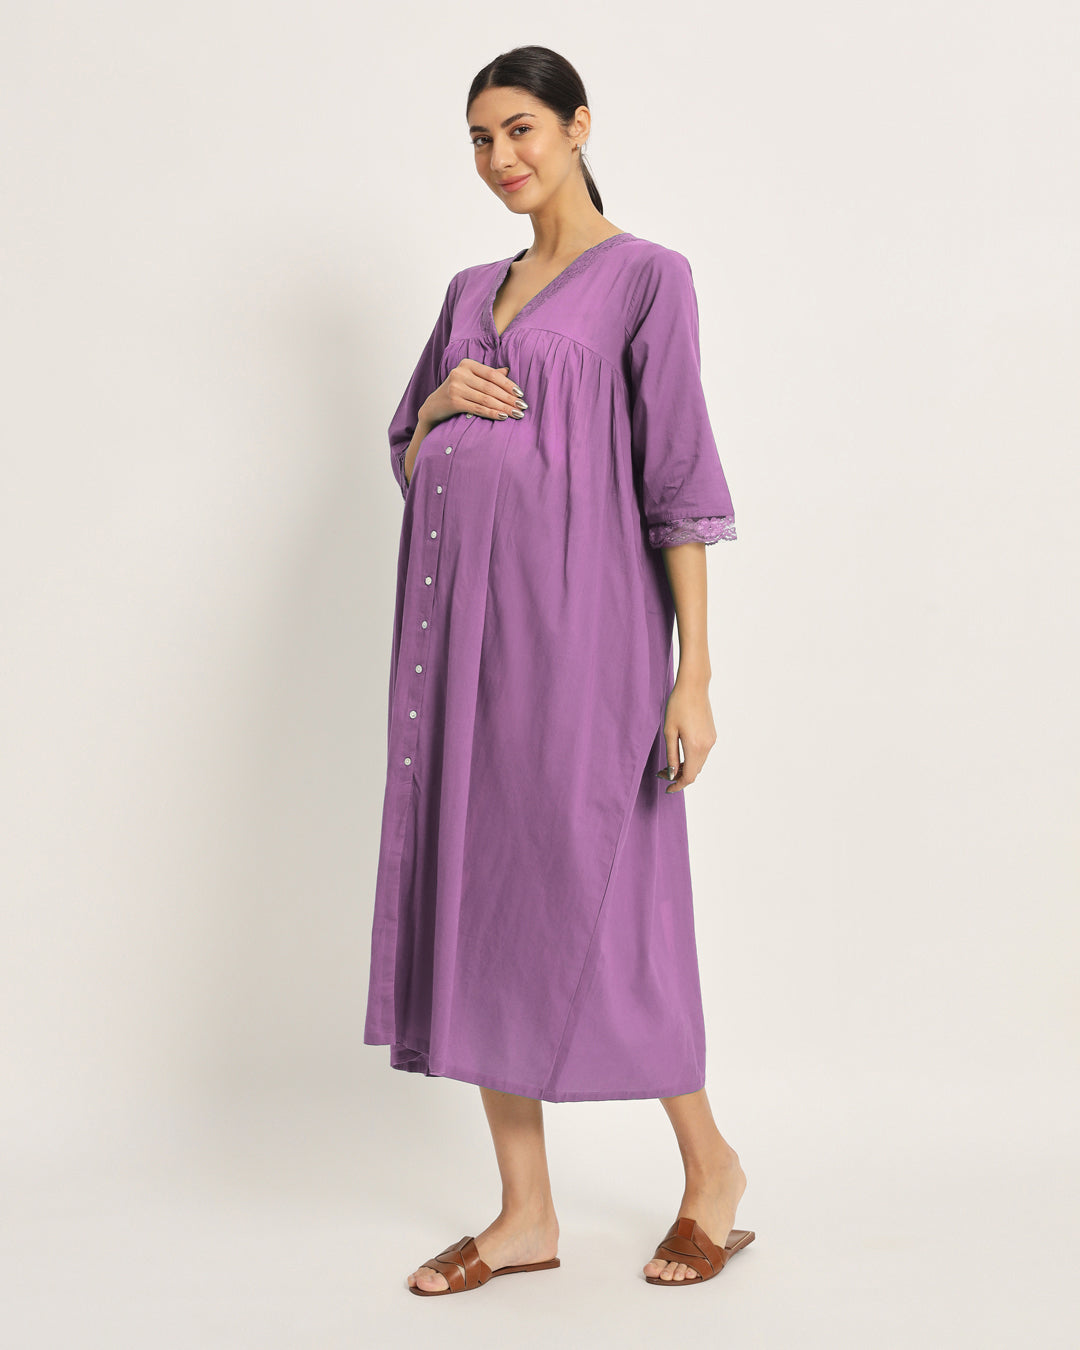 Combo: Black & Wisteria Purple Stylish Preggo Maternity & Nursing Dress - Set of 2